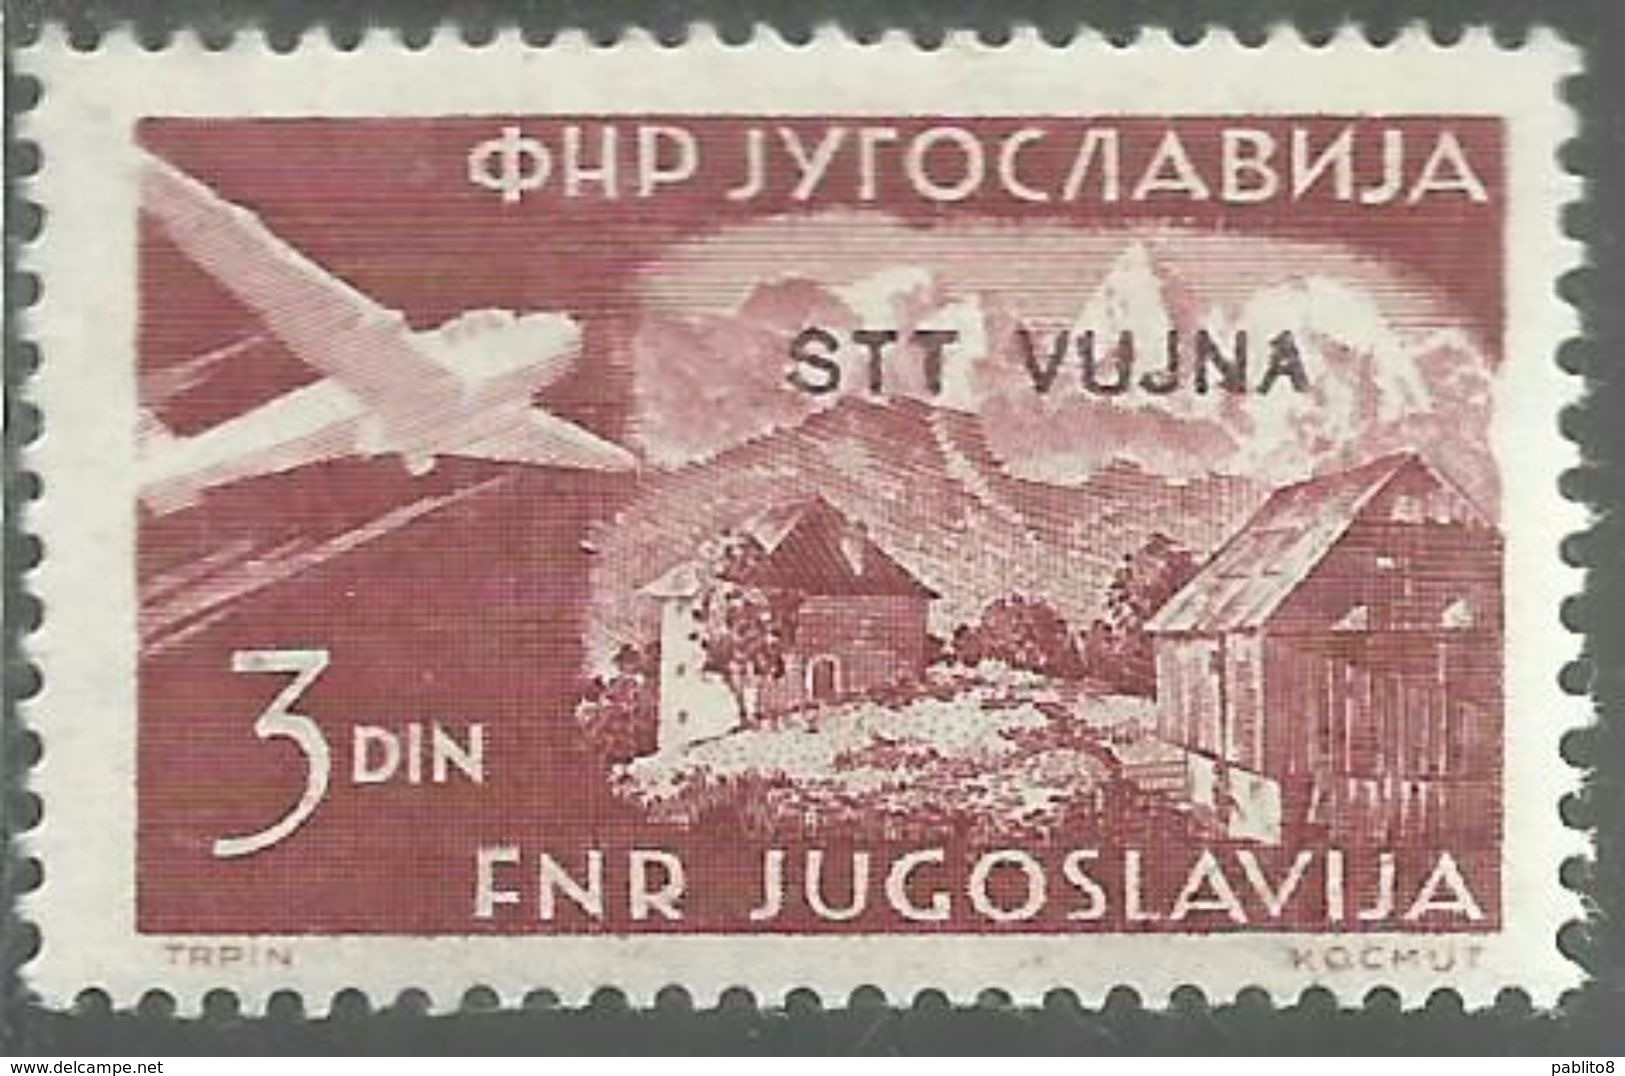 TRIESTE B 1954 POSTA AEREA AIR MAIL ESPERANTO CONGRESS FRANCOBOLLI DI YUGOSLAVIA SOPRASTAMPATO JUGOSLAVIA 3d MNH - Poste Aérienne